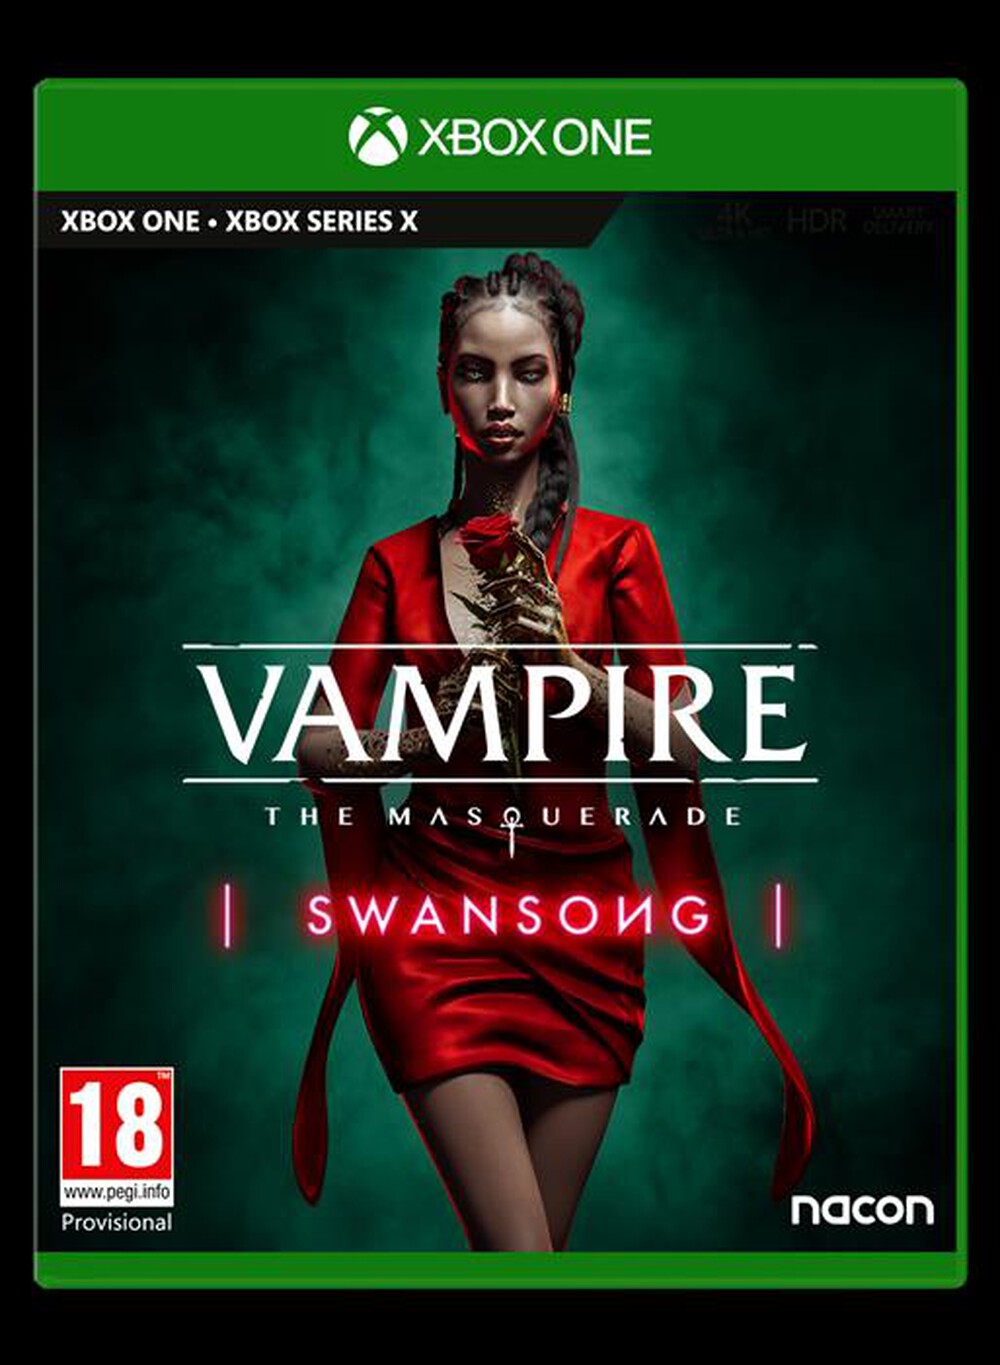 "NACON - VAMPIRE: THE MASQUERADE - SWANSONG XBOX ONE"